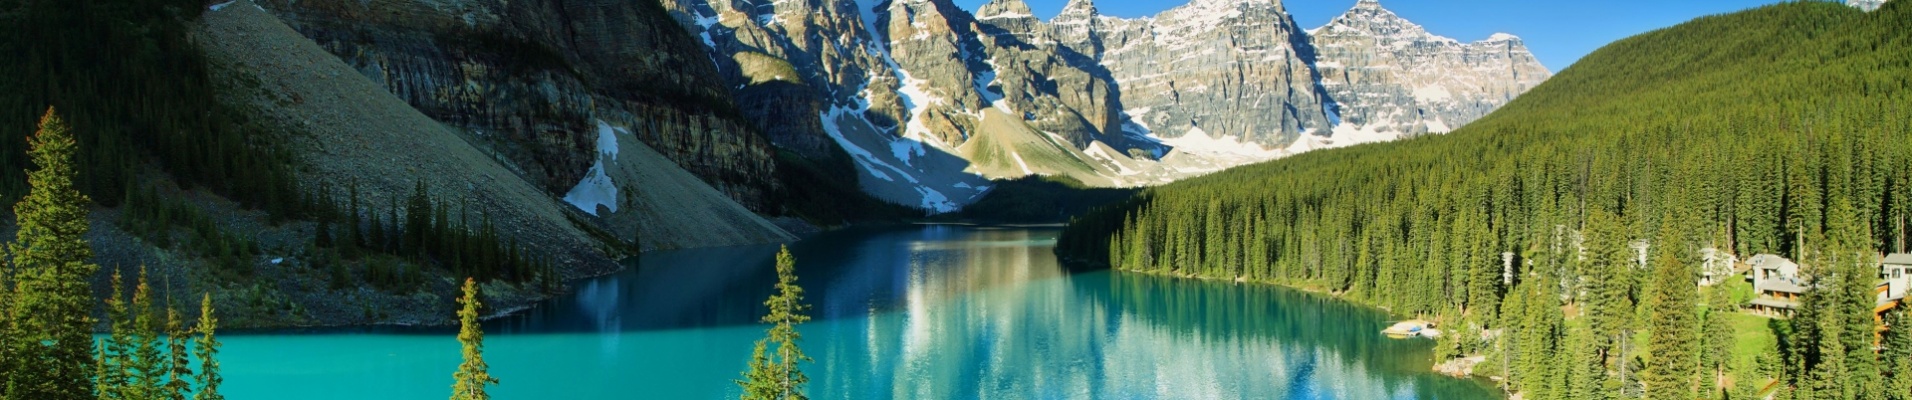 panorama-lac-moraine-rocheuses-canada